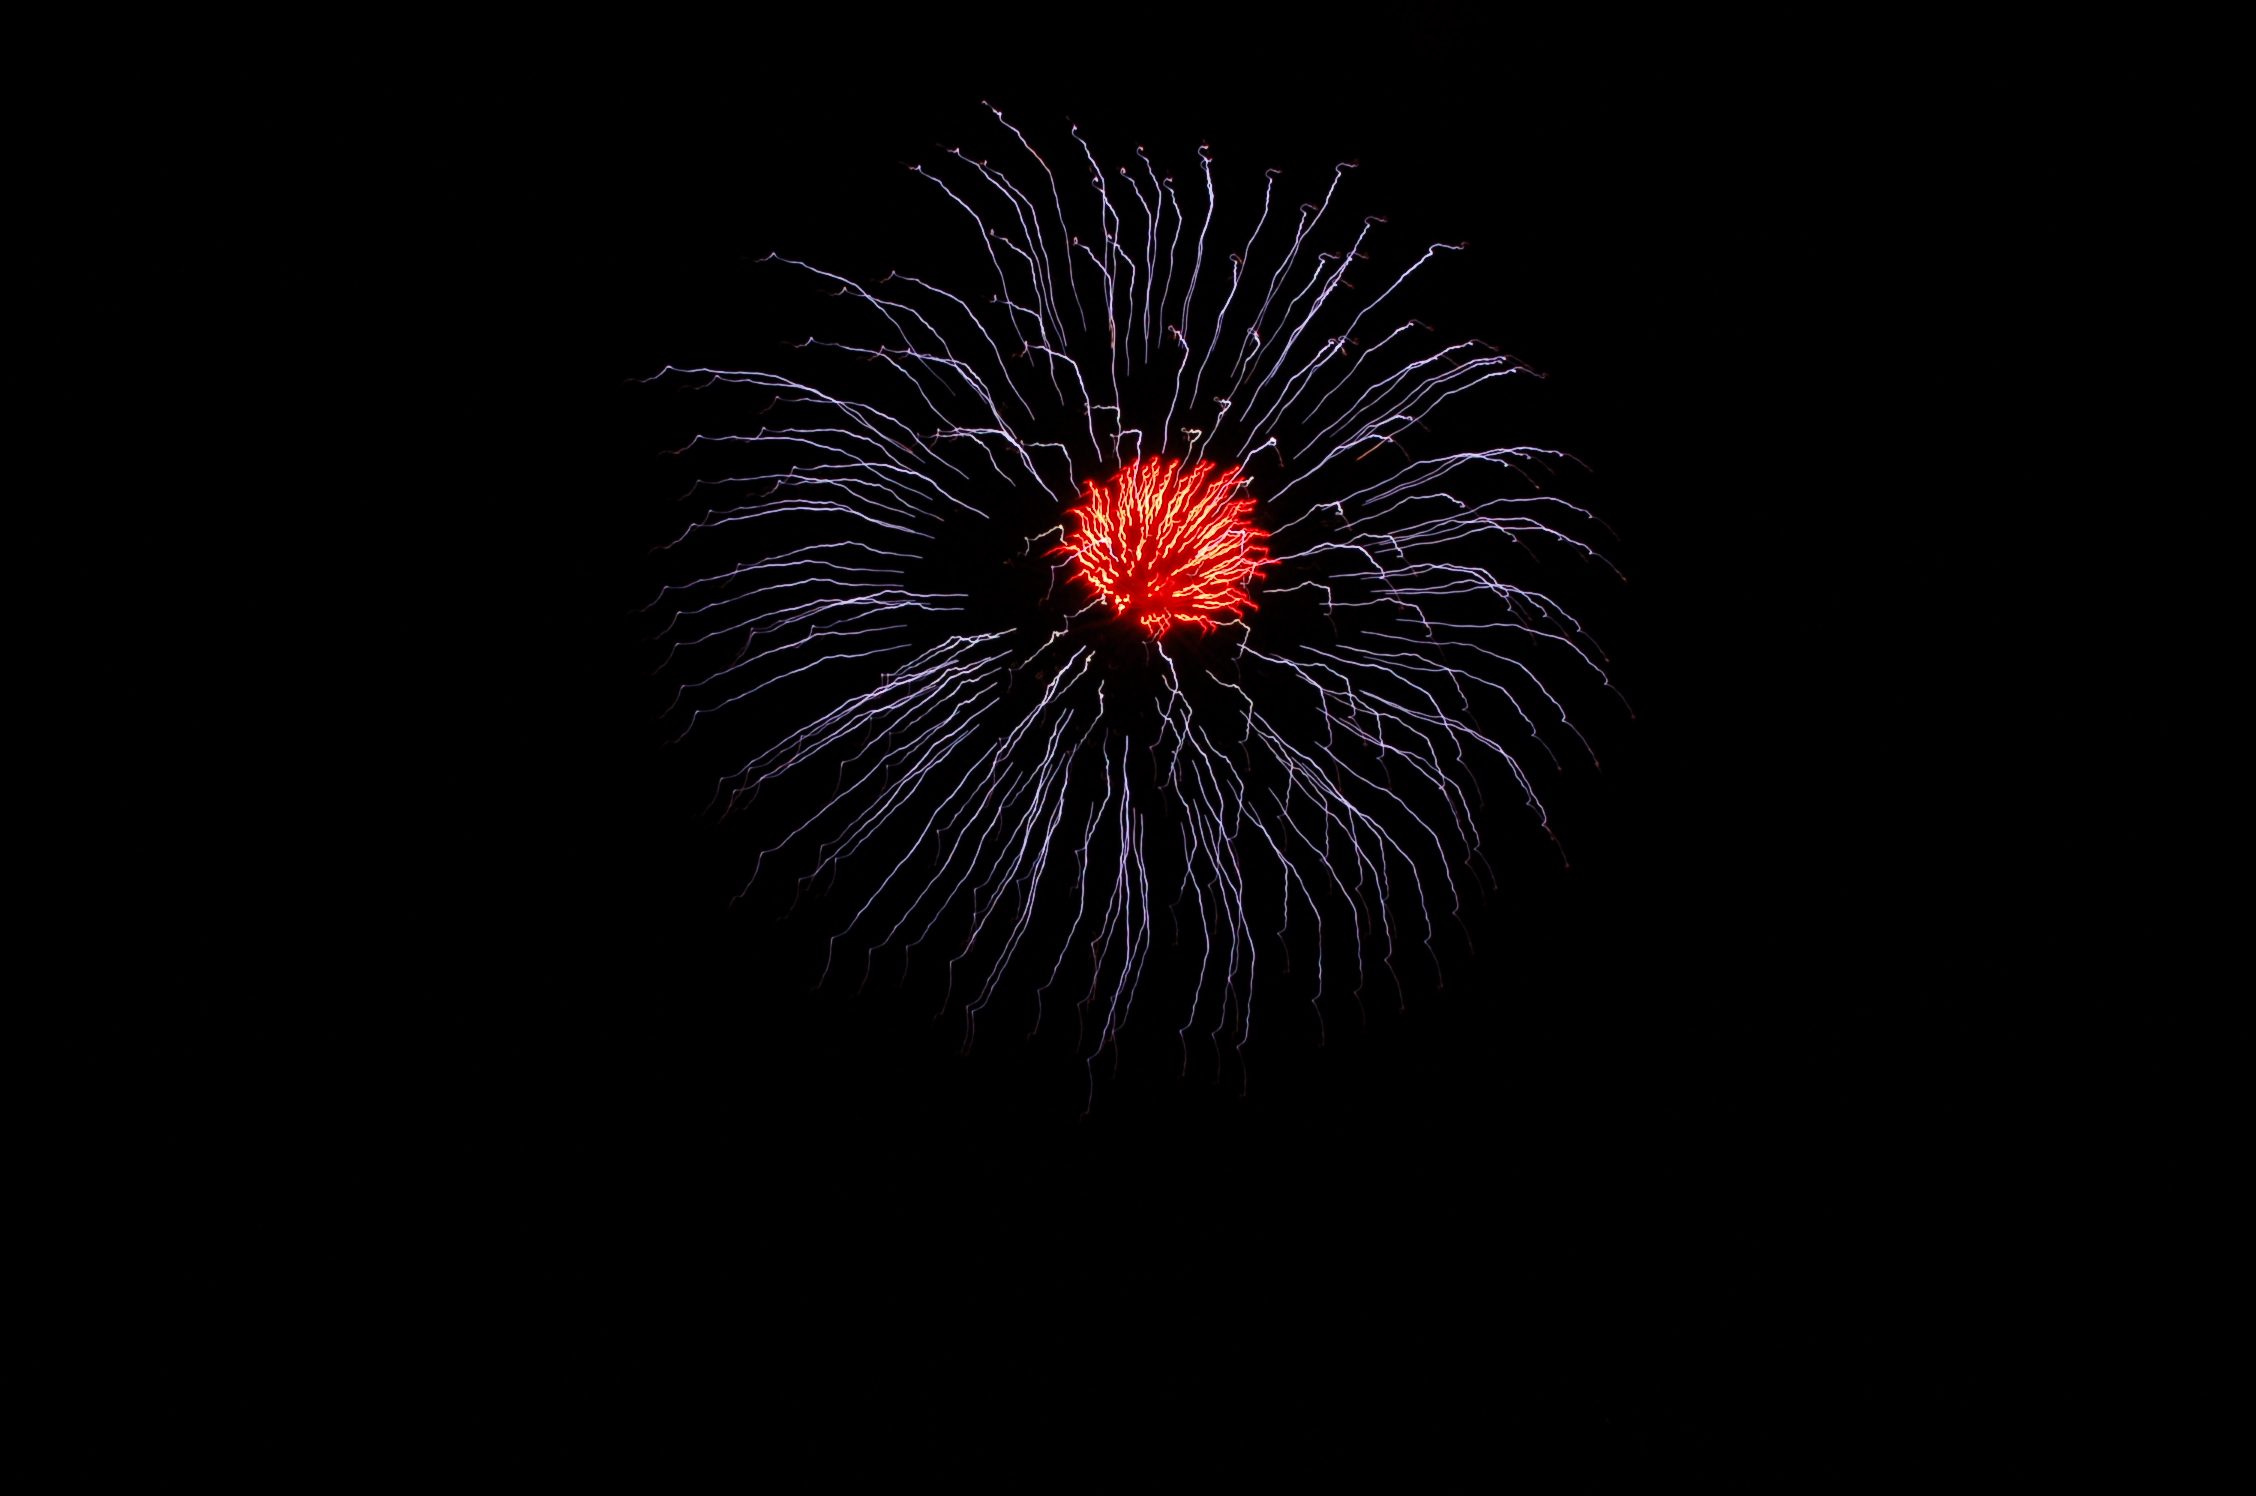 FA_Fireworks_Fireworks009.JPG